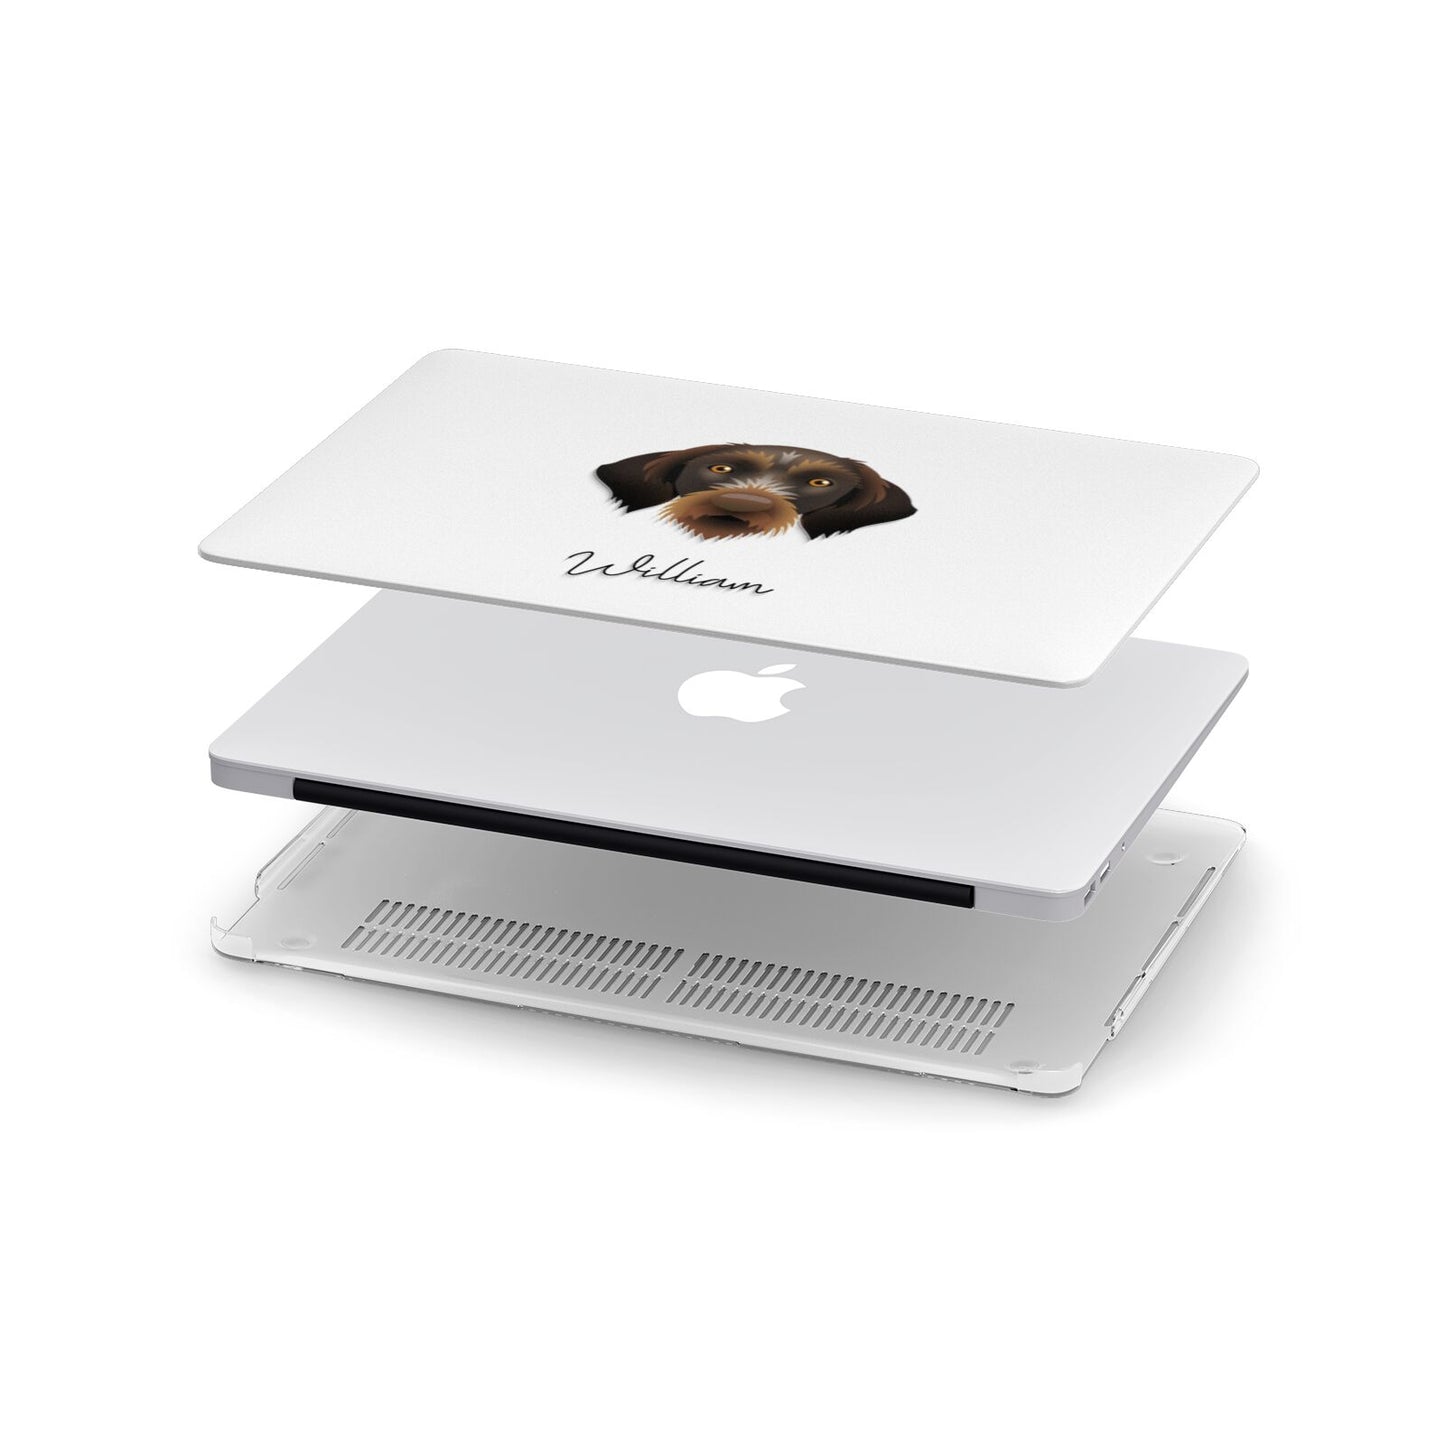 Korthals Griffon Personalised Apple MacBook Case in Detail